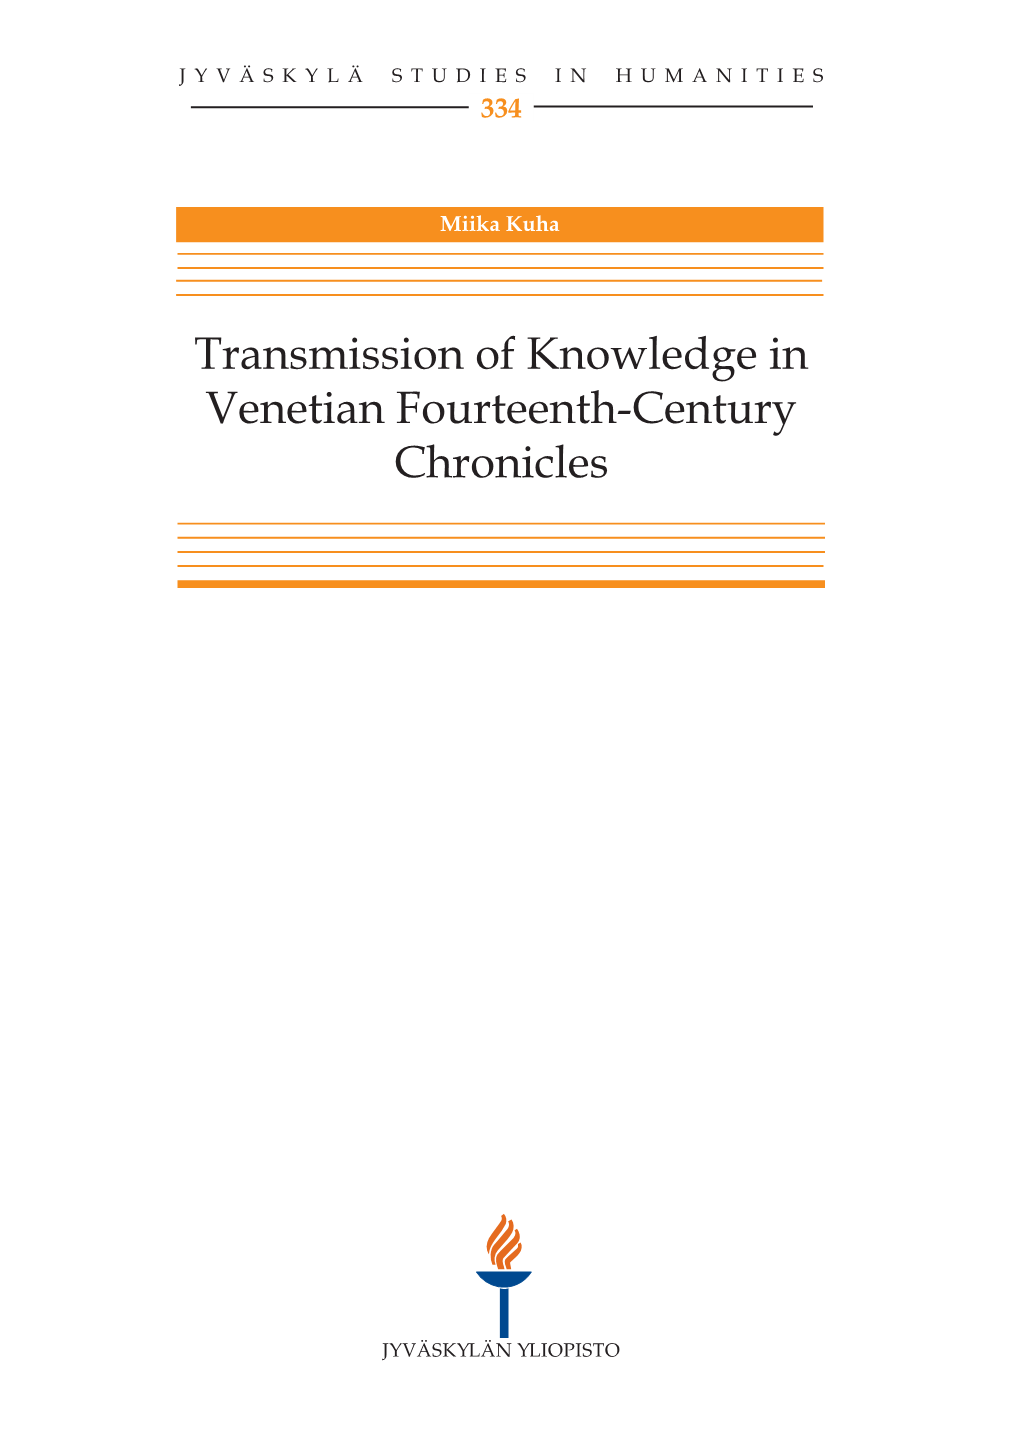 Transmission of Knowledge in Venetian Fourteenth-Century Chronicles JYVÄSKYLÄ STUDIES in HUMANITIES 334